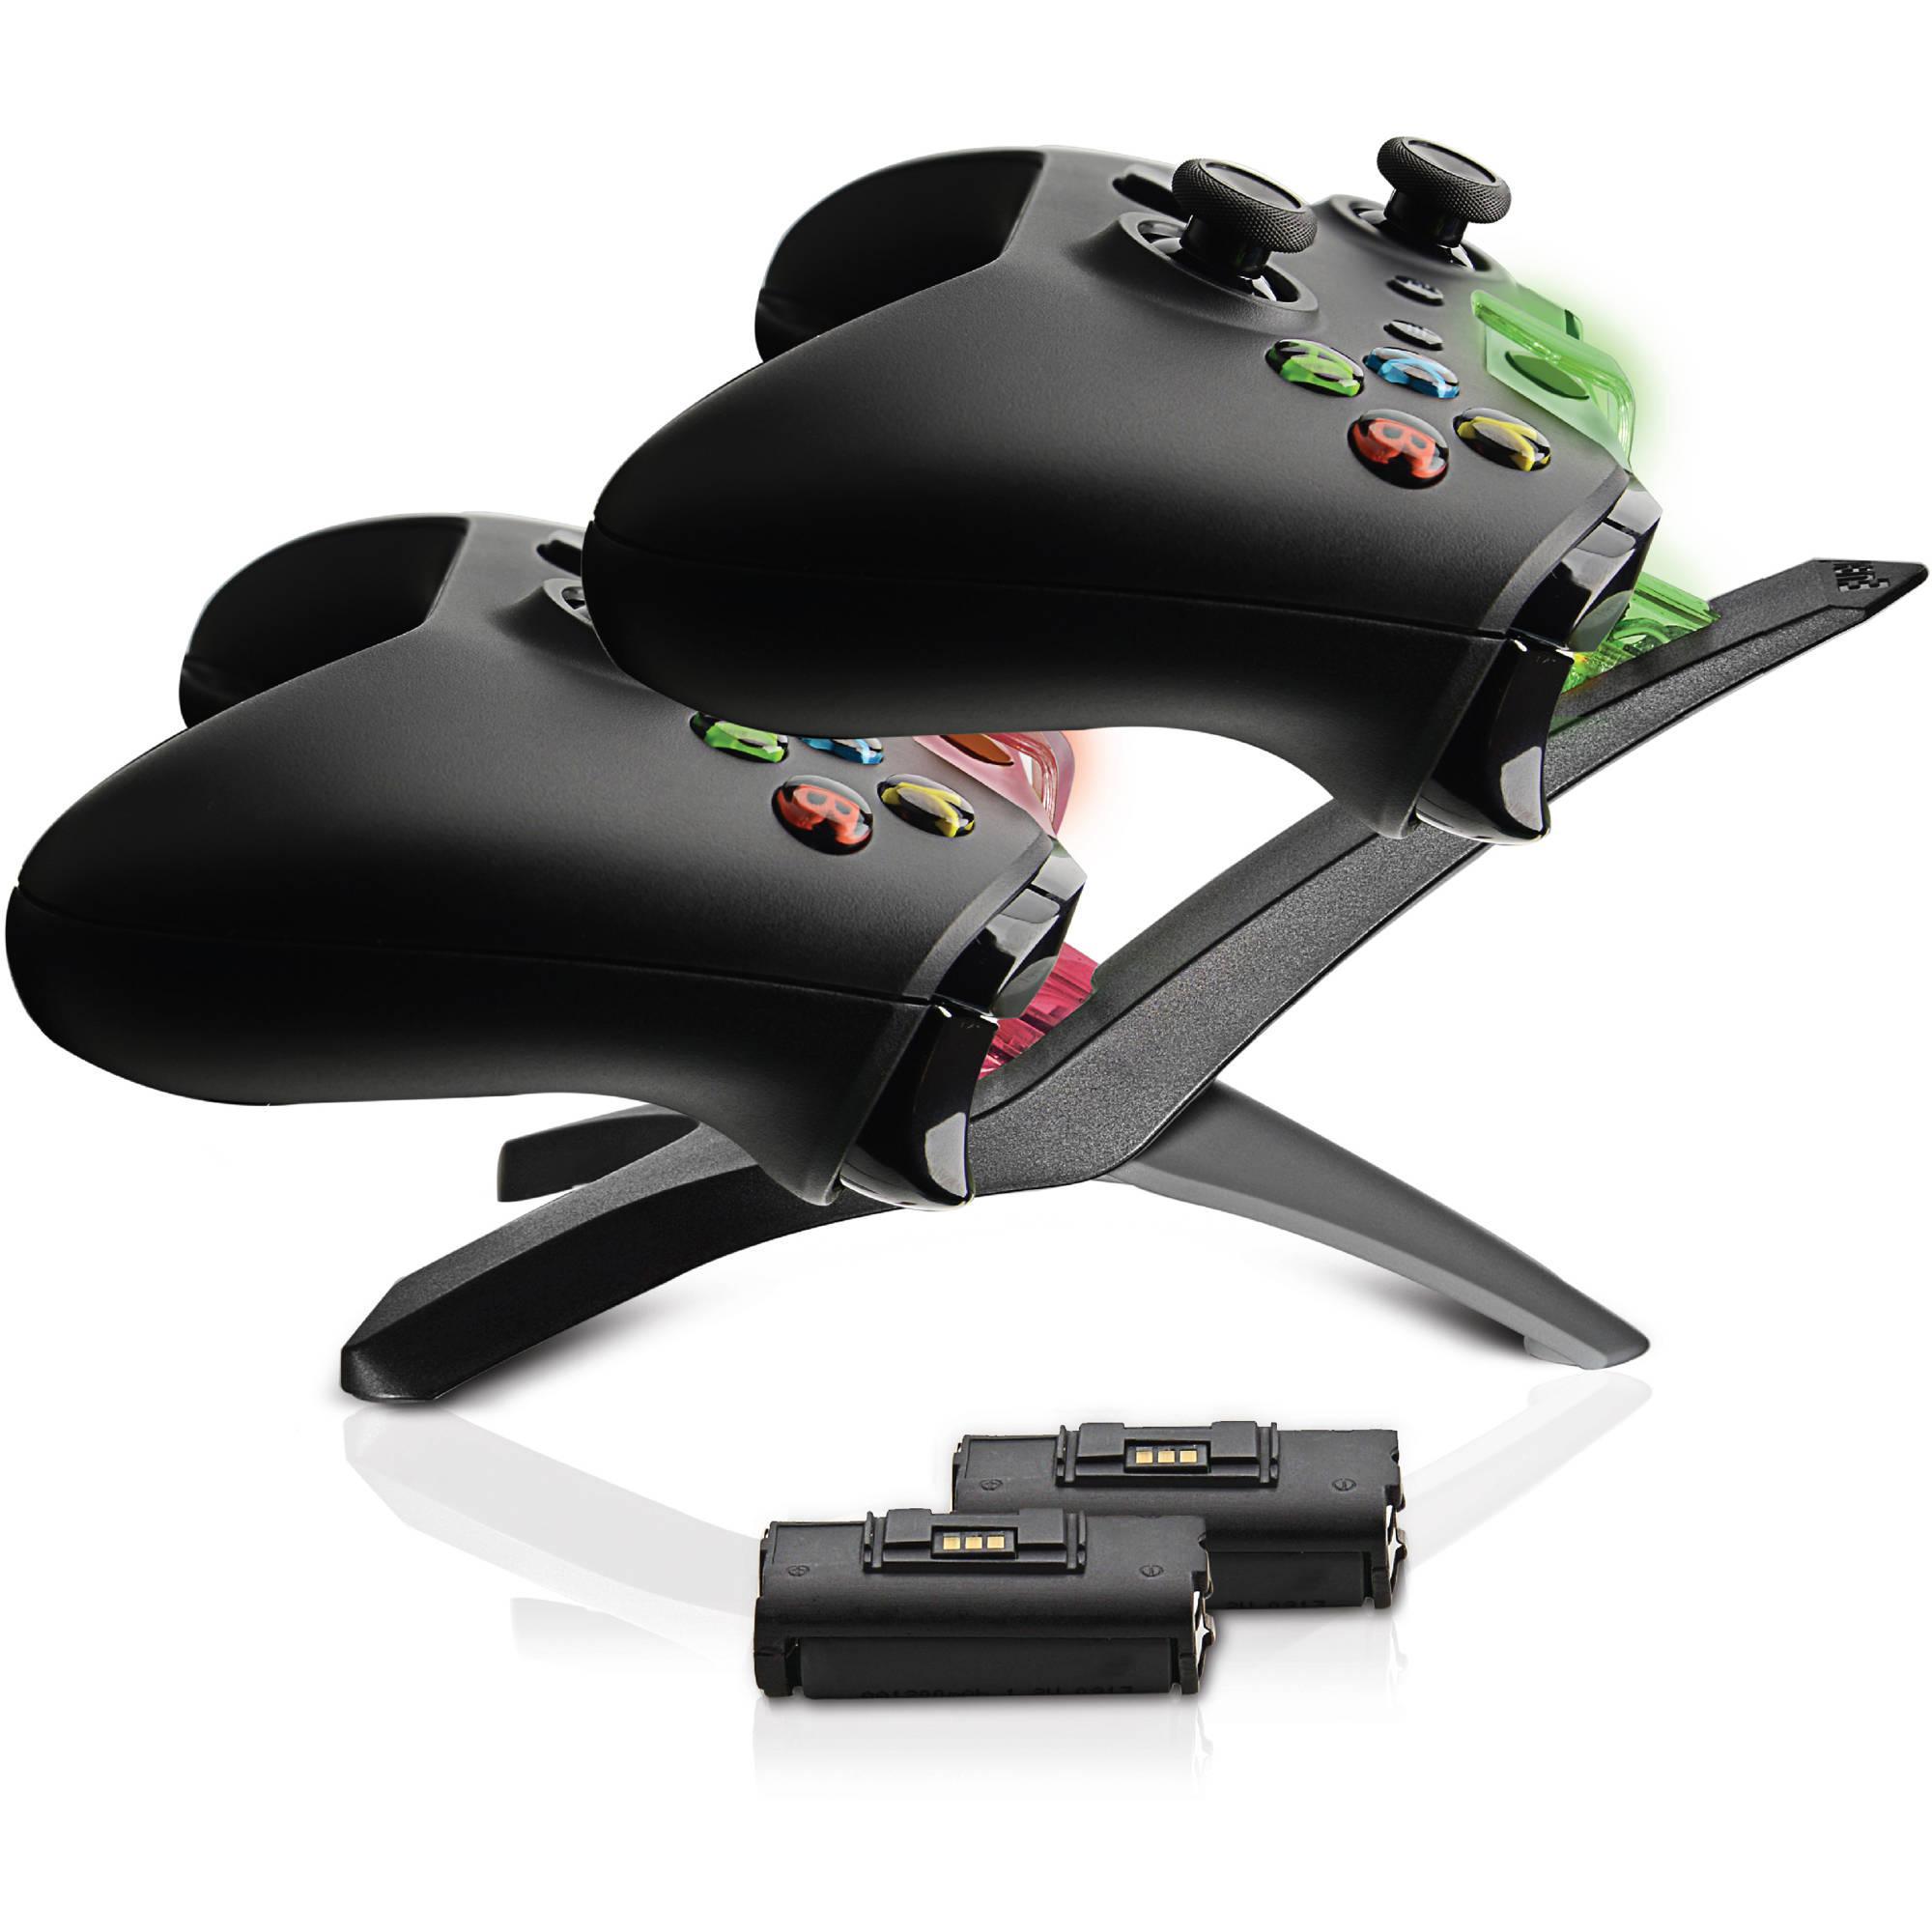 ondernemen Chronisch duisternis Duo Docking Station - Xbox One - Energizer LED [Mist 1 accu] (Xbox One) |  €28.99 | Goedkoop!